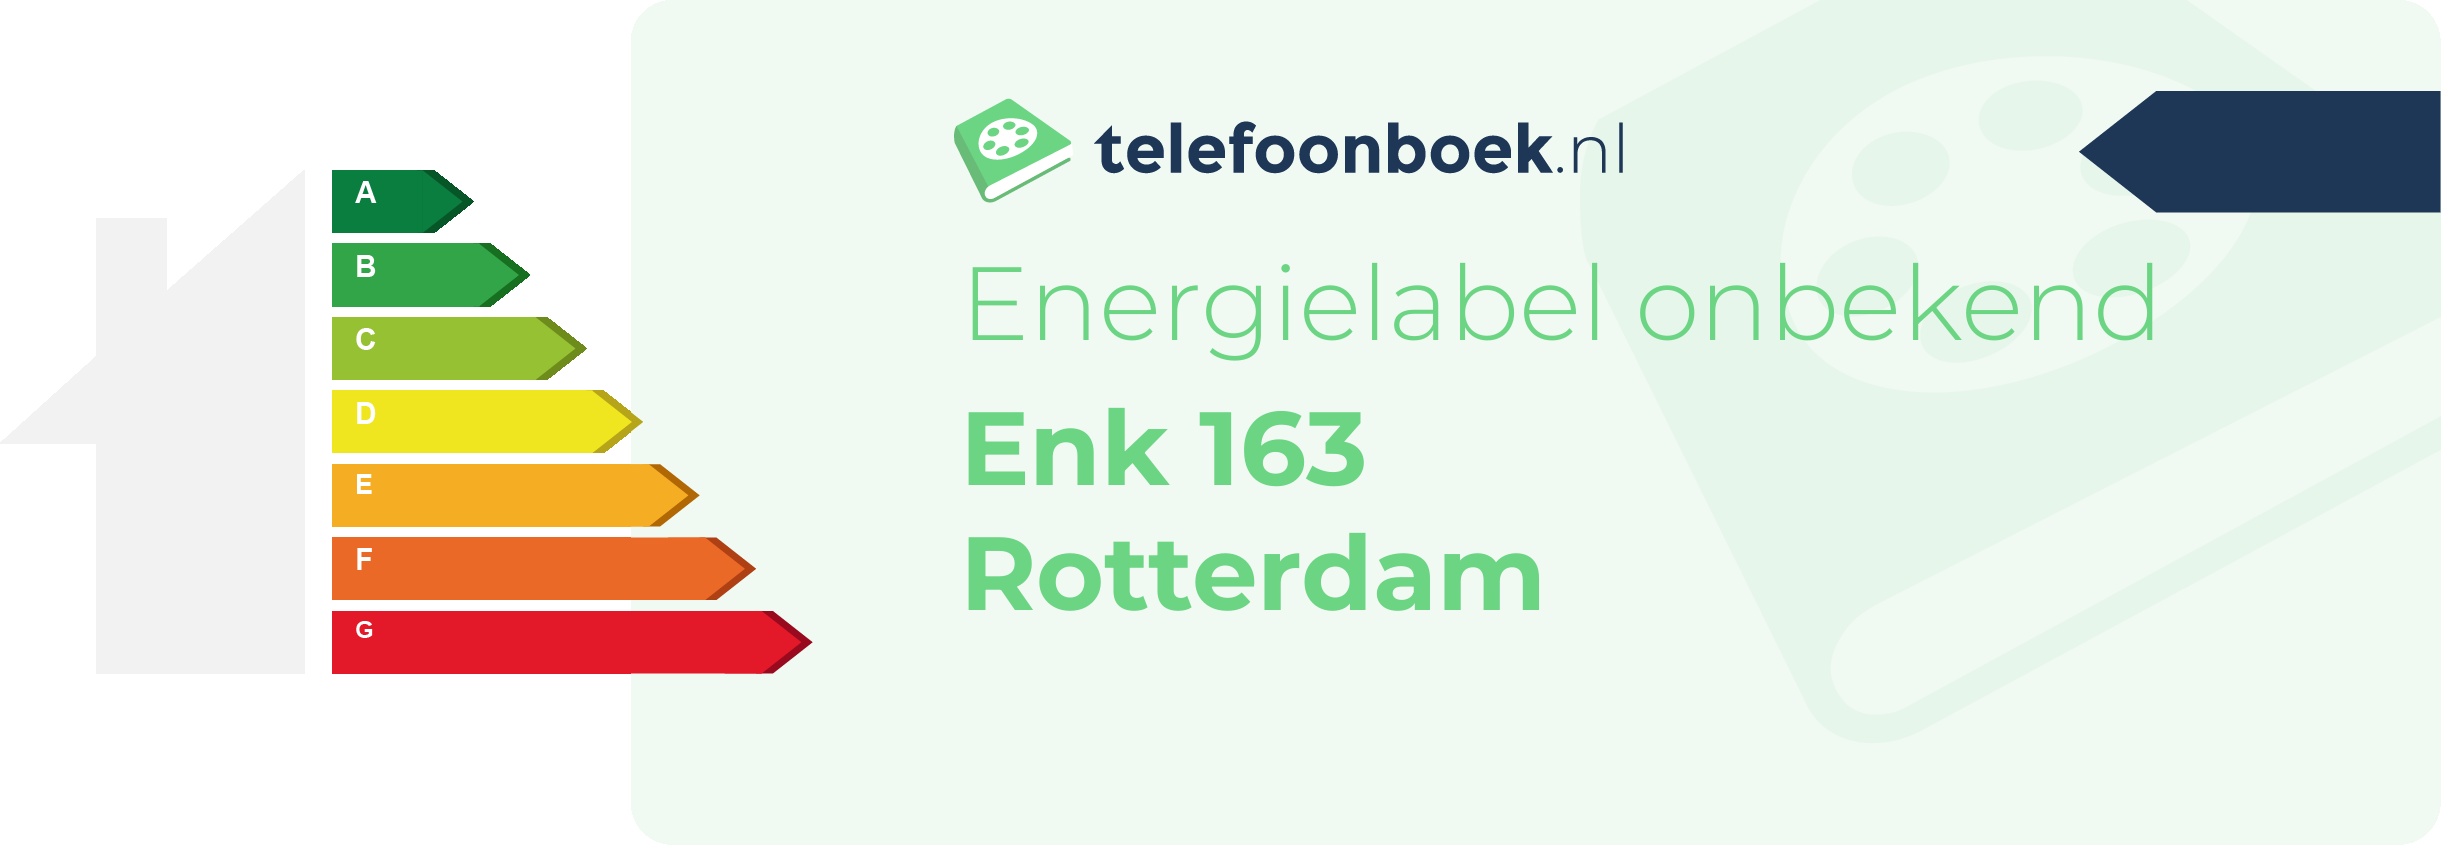 Energielabel Enk 163 Rotterdam